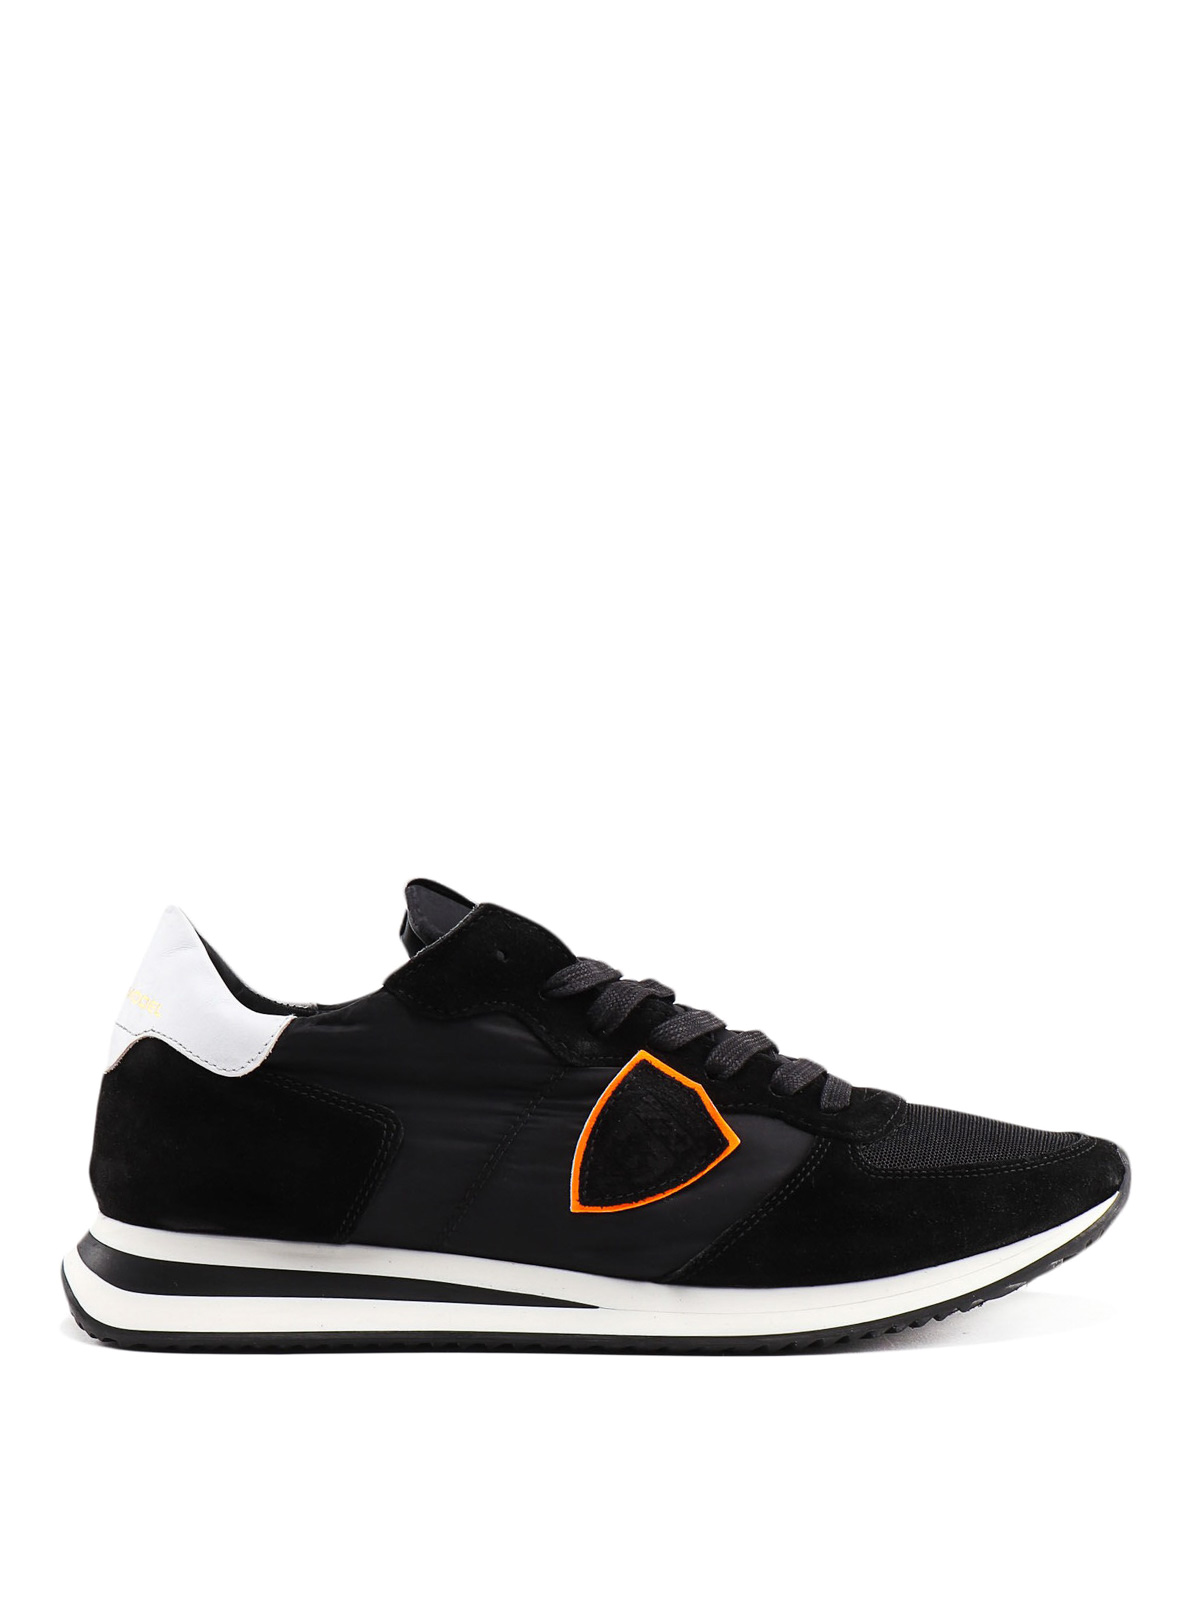 Philippe Model - Tropez black sneakers - trainers - TZLUW011 | iKRIX.com